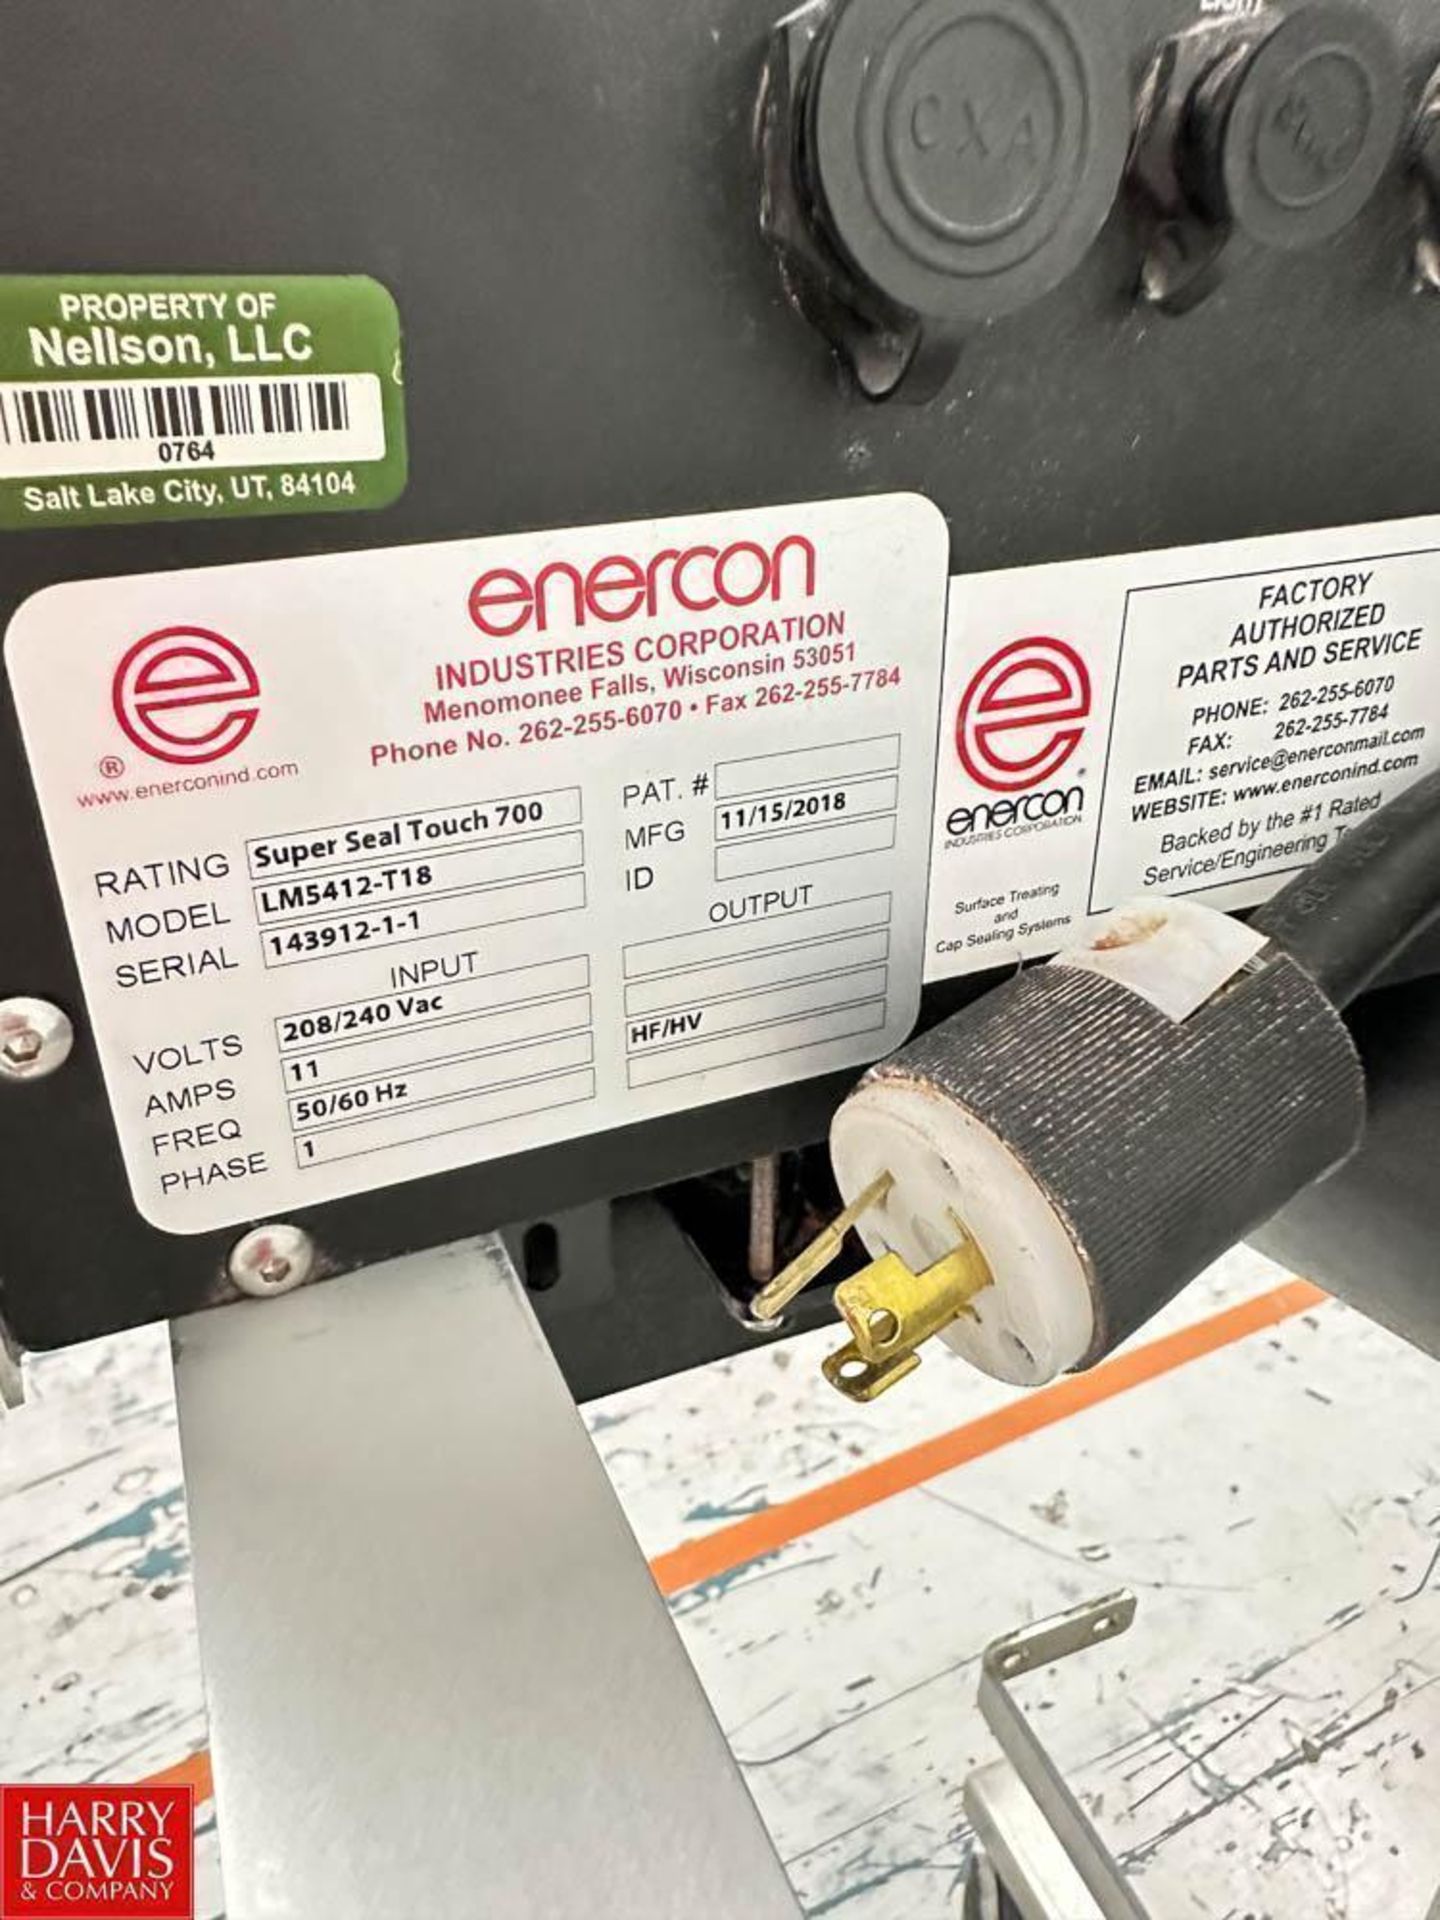 2018 Enercon Tamper Evident Sealer, Type: Super Seal Touch 700, Model: LMS412-718 - Image 4 of 4